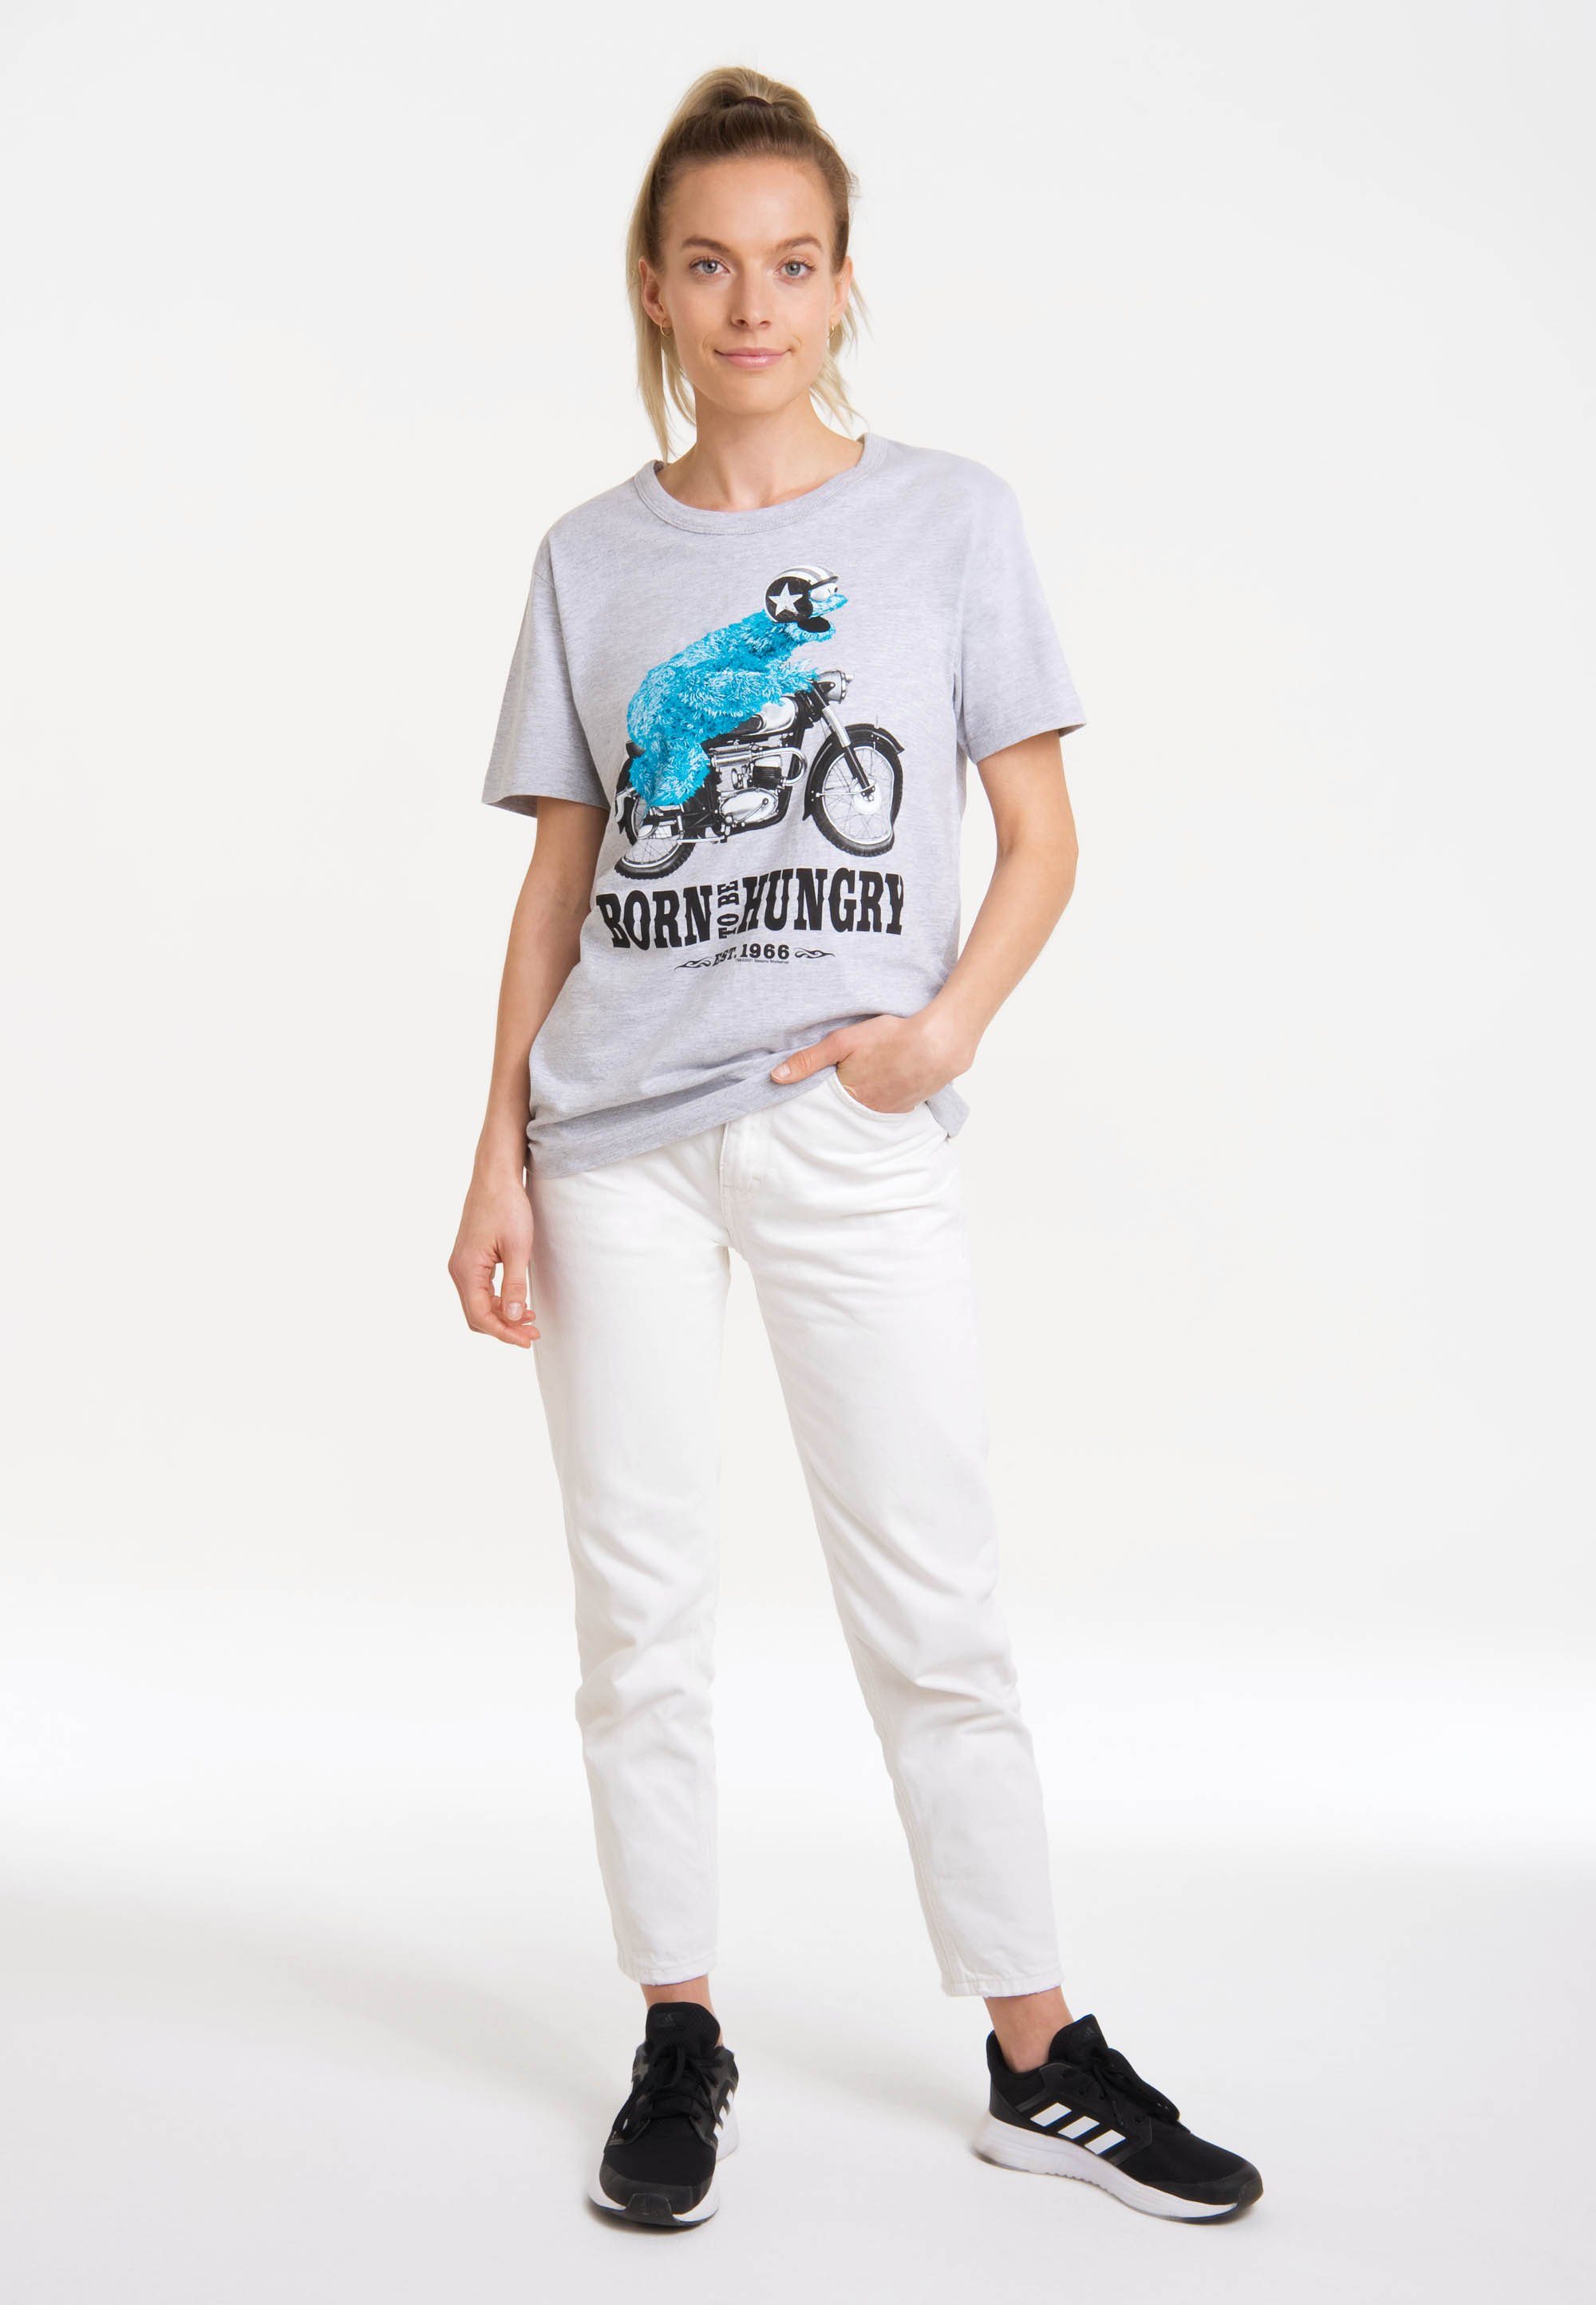 LOGOSHIRT T-Shirt Sesamstrasse - Krümelmonster Motorrad mit lizenziertem  Print, Mit großen Krümelmonster-Print auf der Front als Highlight